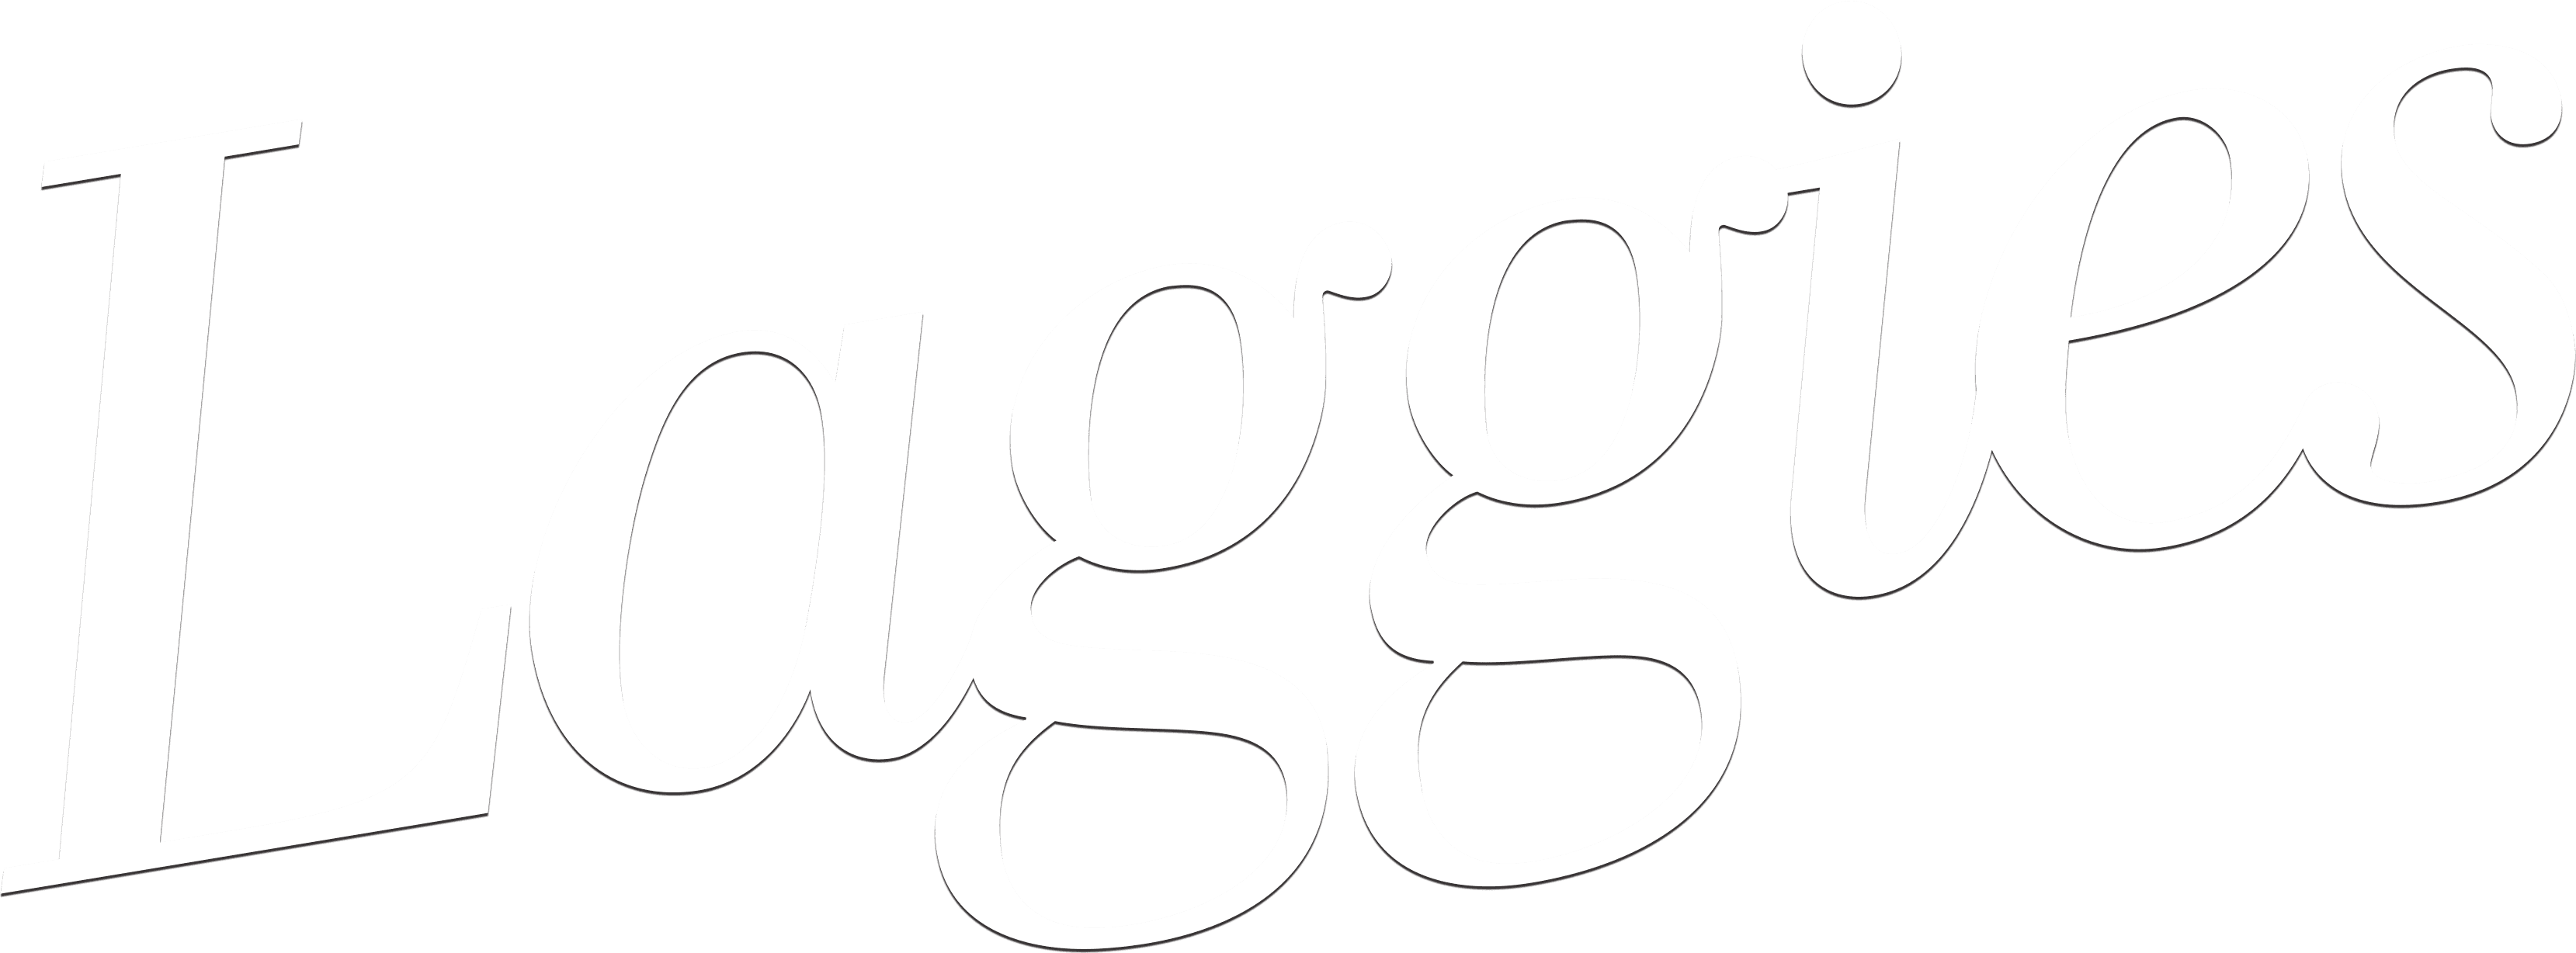 Laggies logo